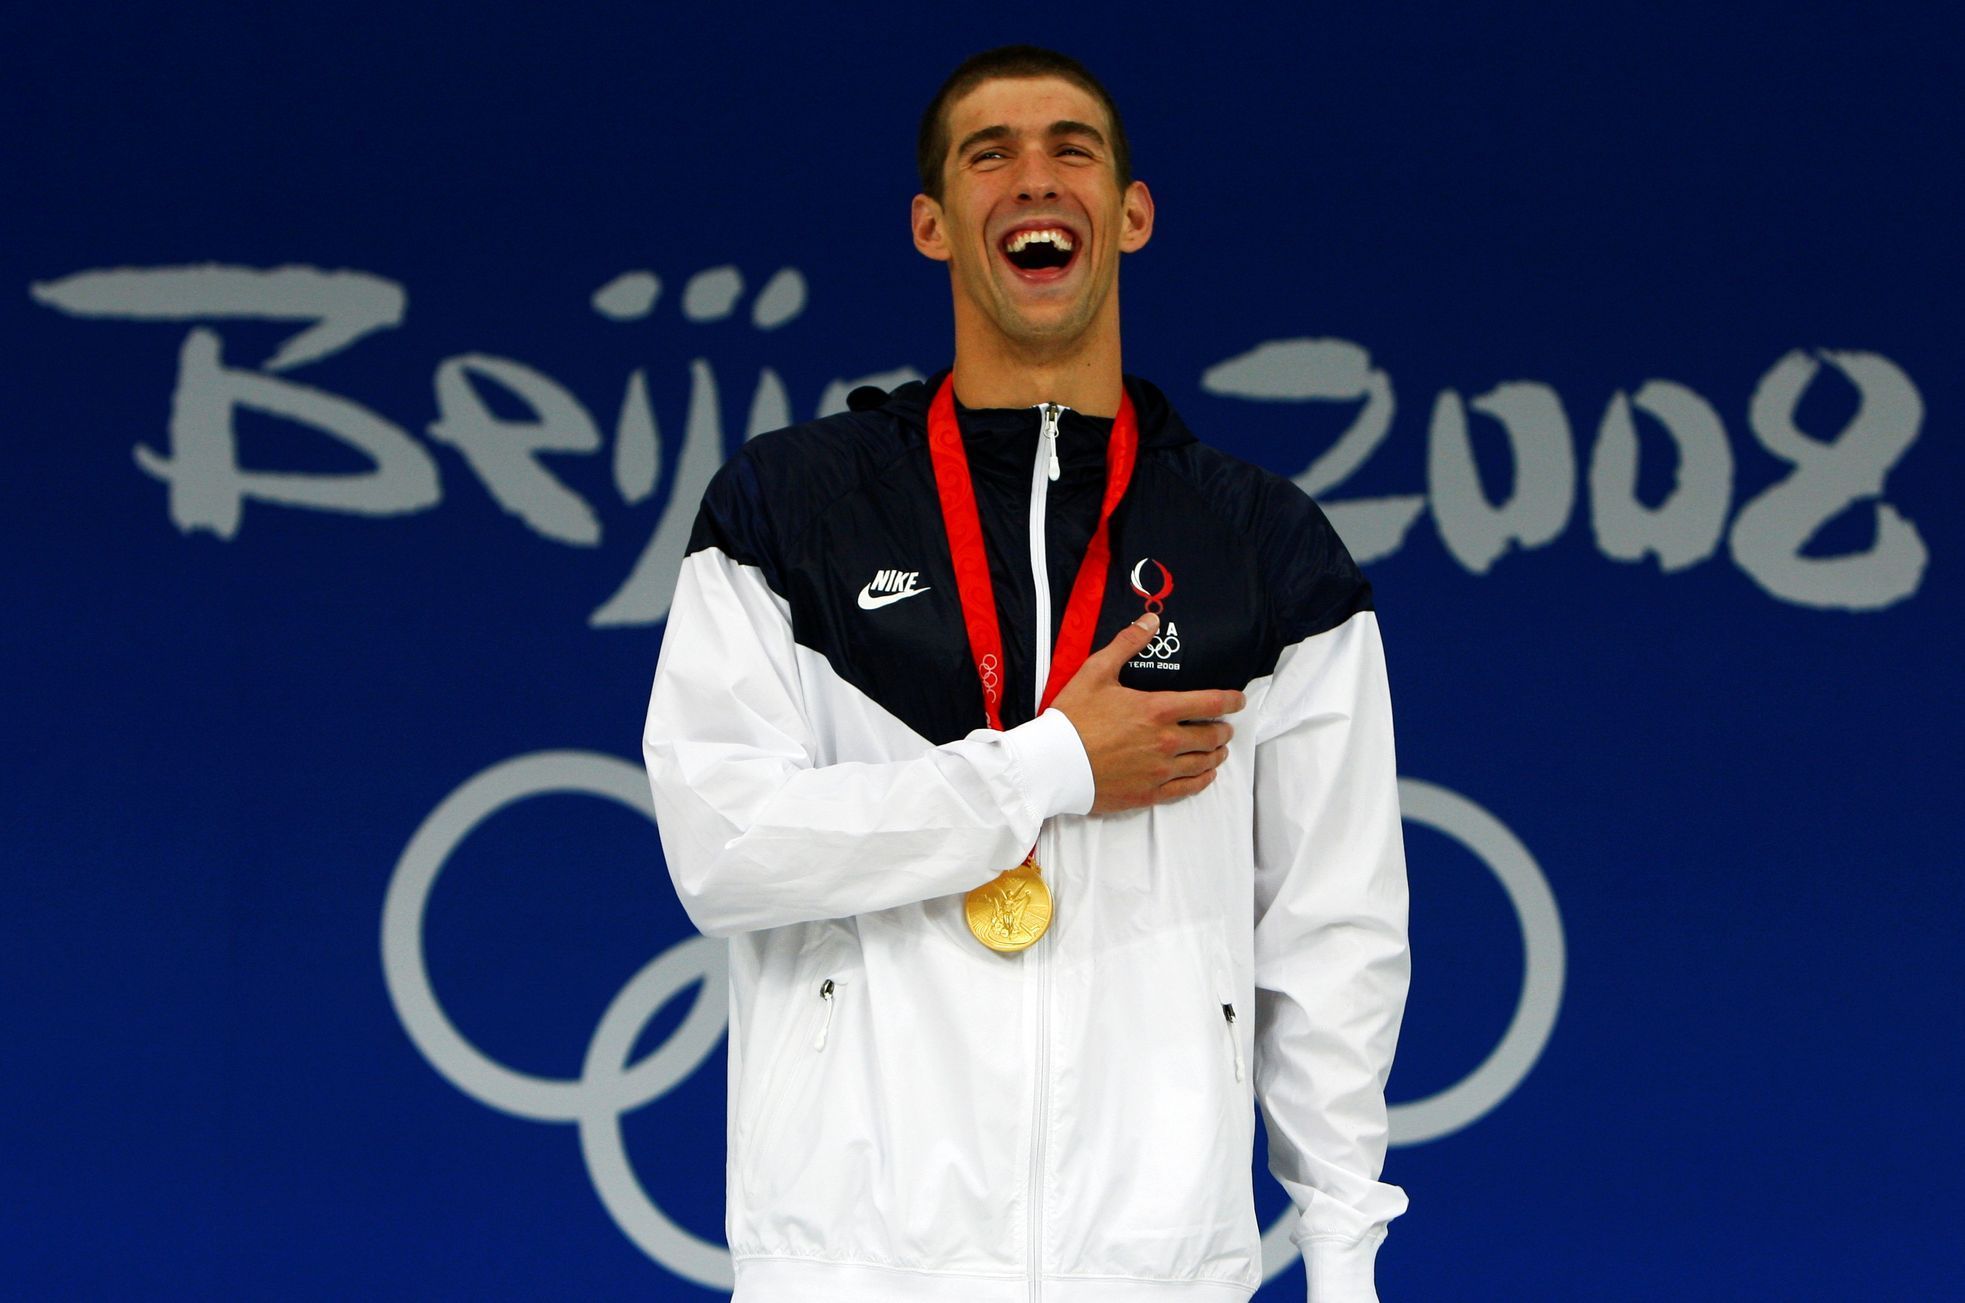 Michael Phelps (OH 2008)